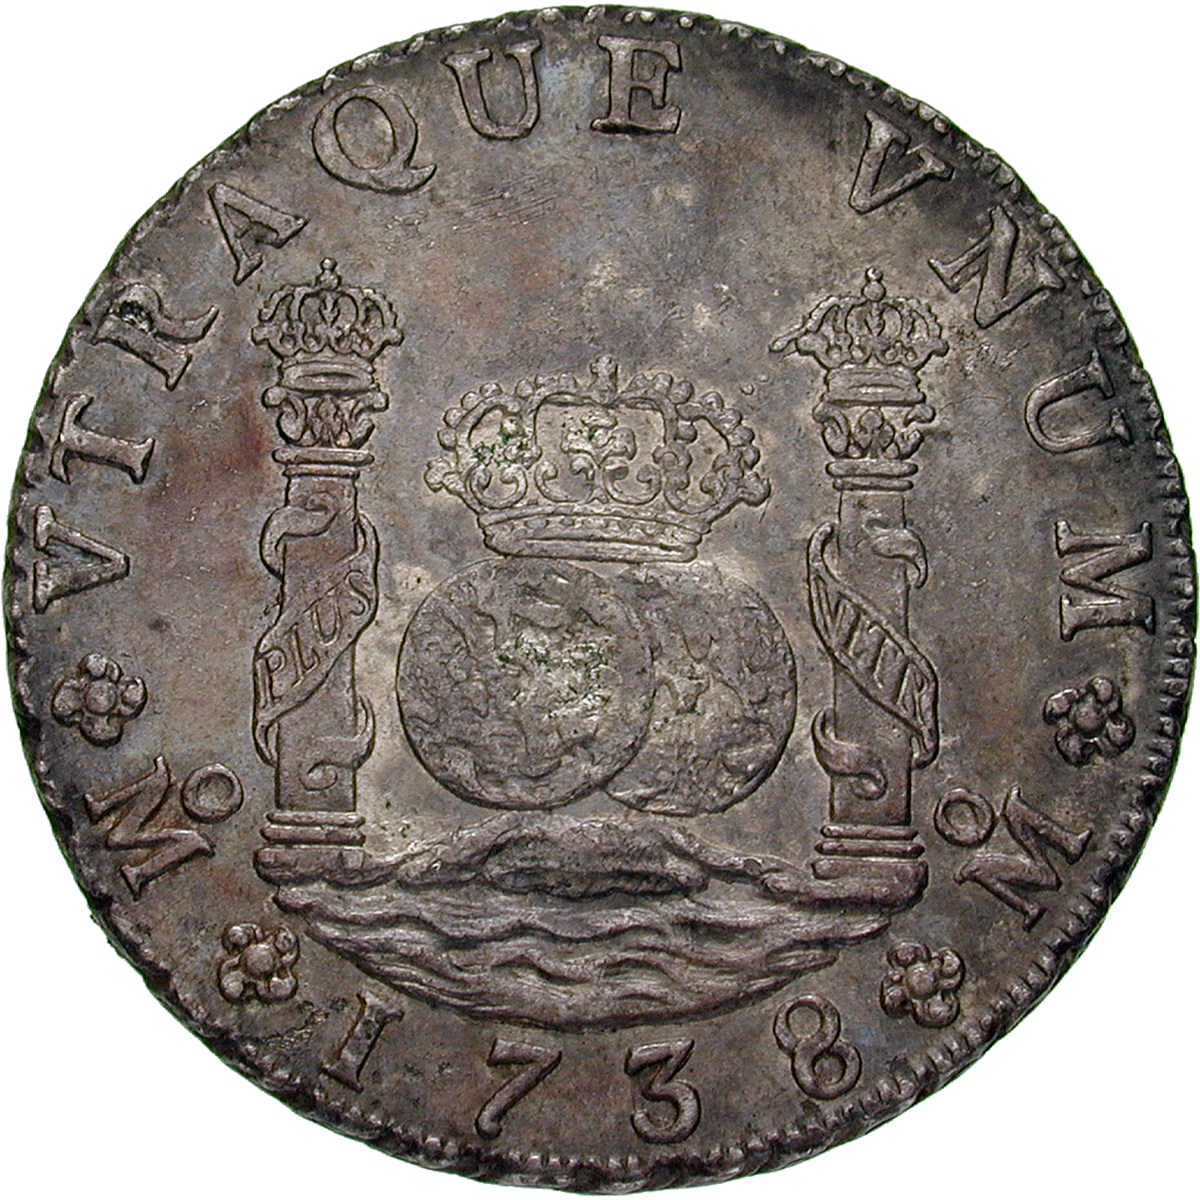 Viceroyalty of New Spain, Philip V, Real de a ocho (Peso) 1738 (reverse)